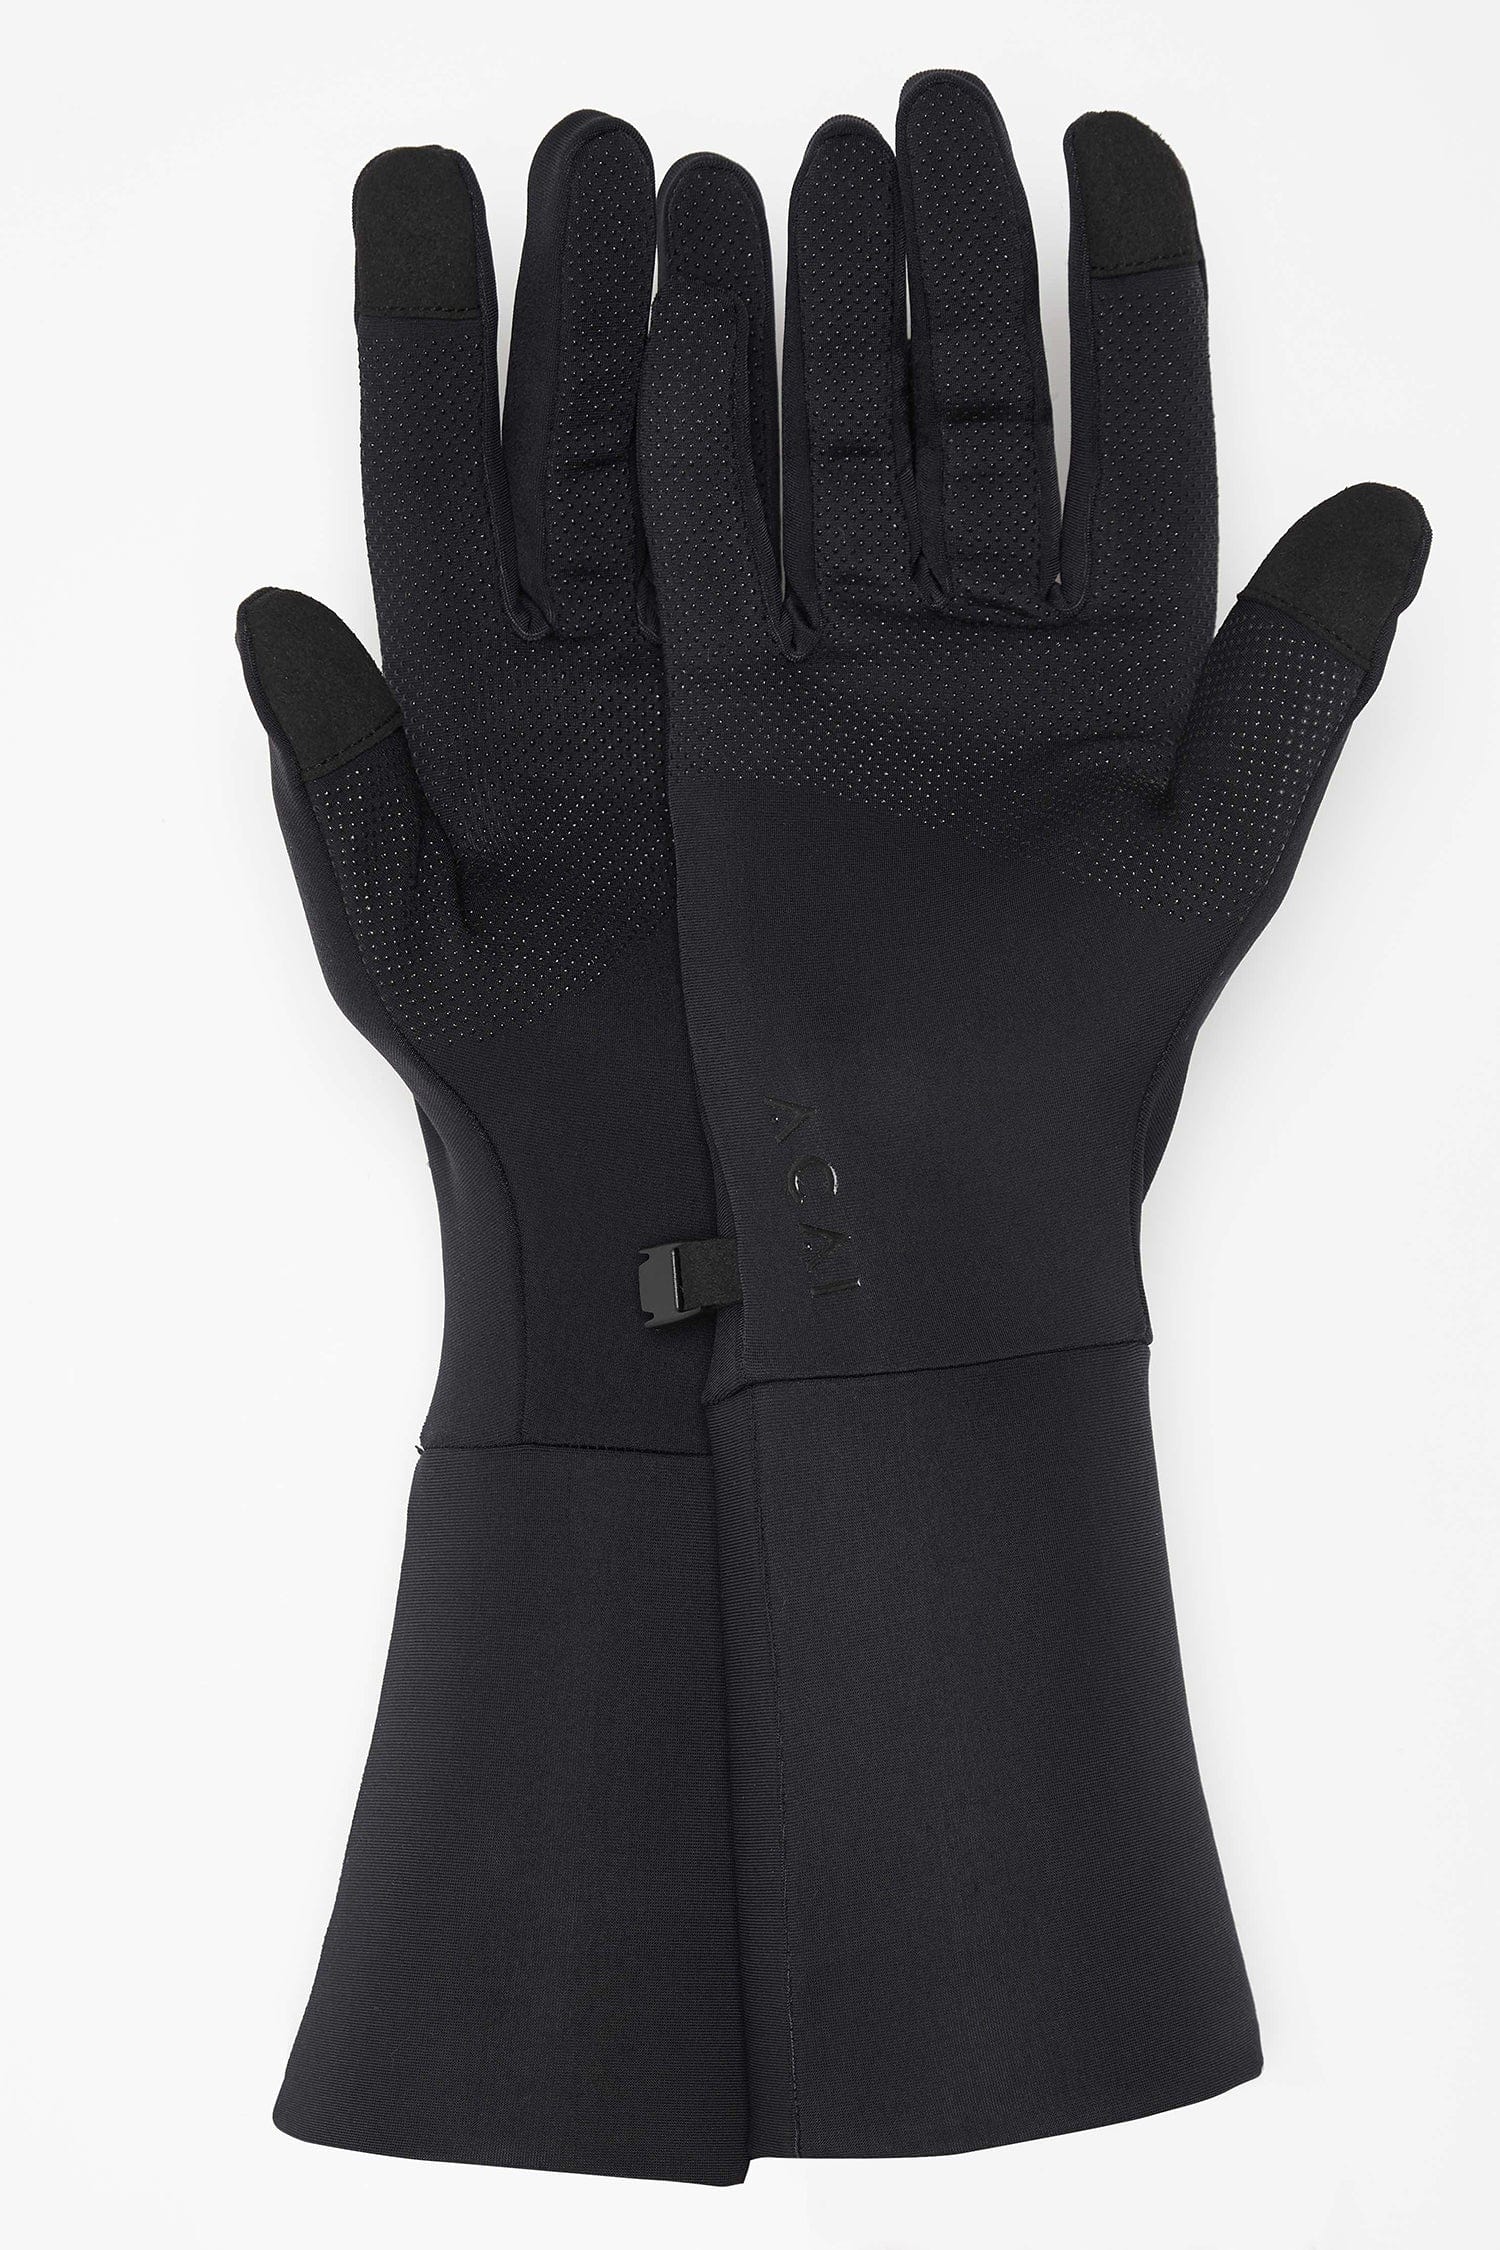 ACAI Outdoorwear | Women’s Outdoor Performance Gloves